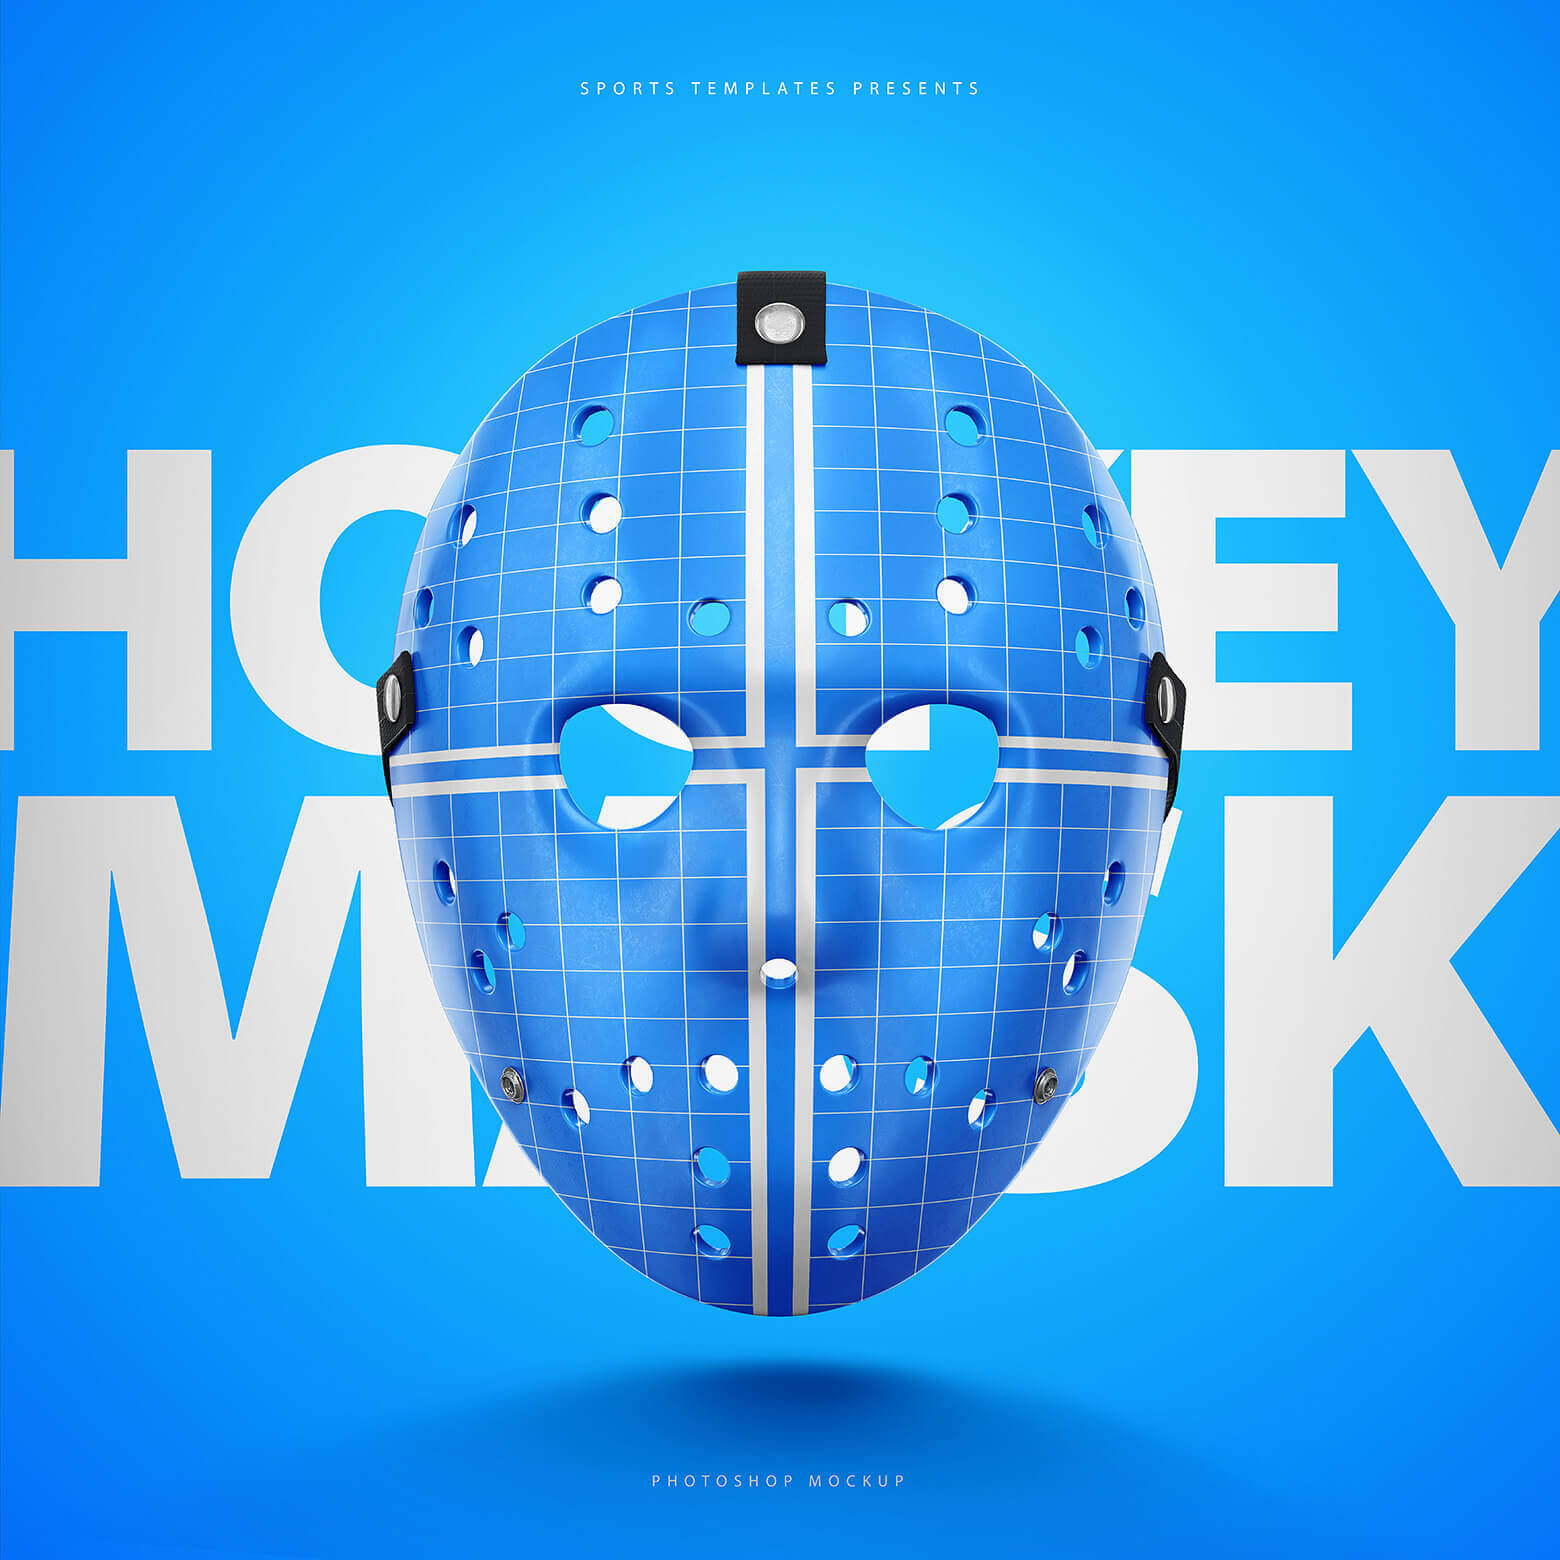 Hockey Face Mask Mockup